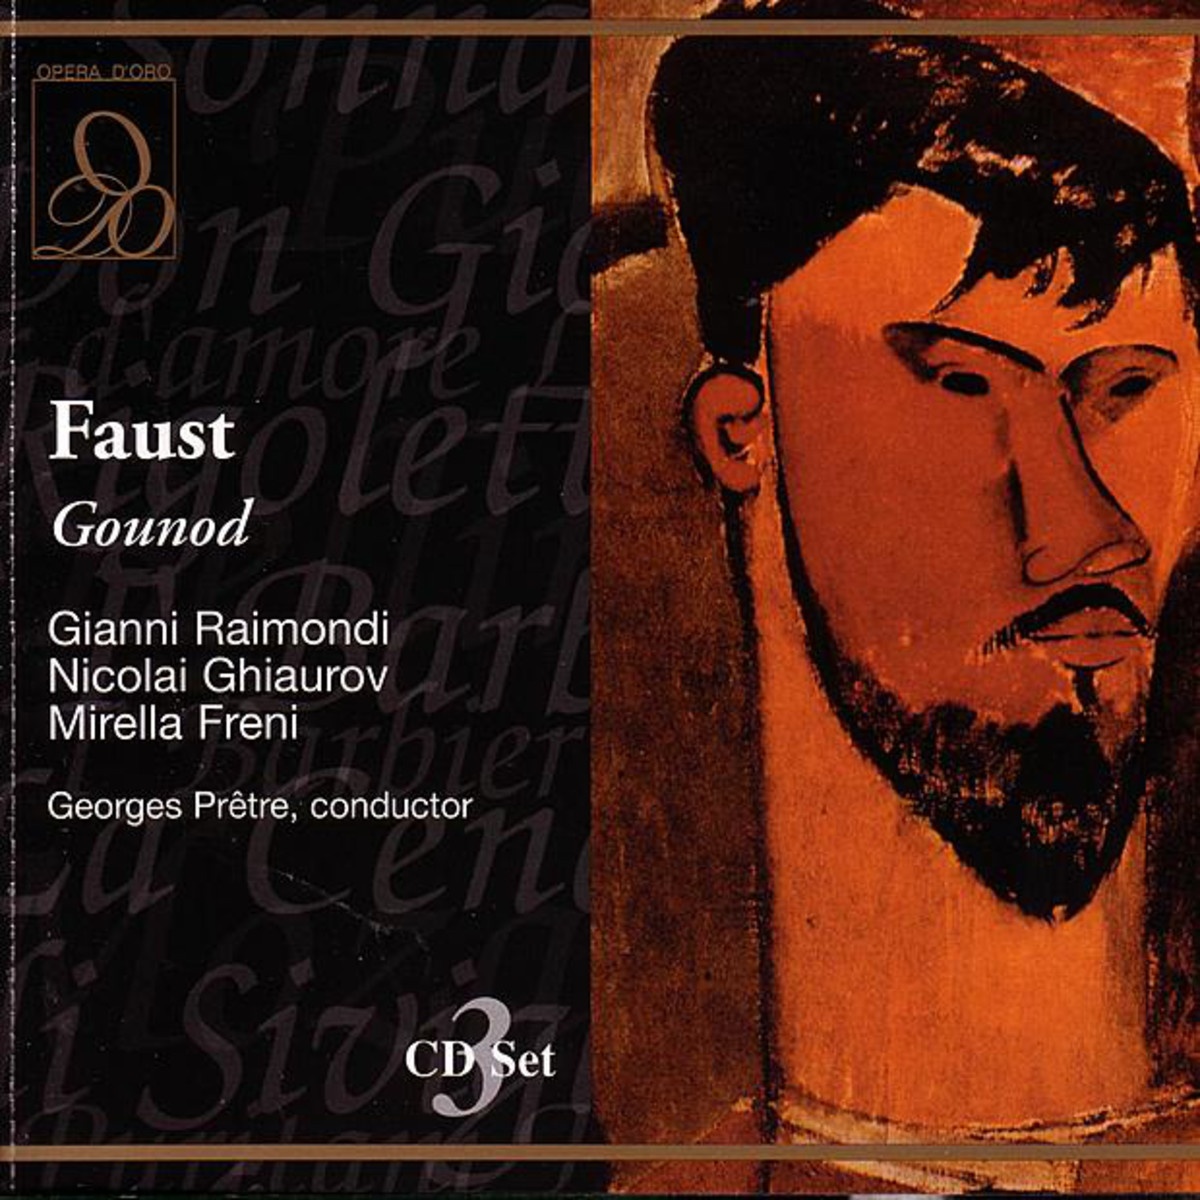 Faust 1986 Digital Remaster, Act III: C' est ici? Faust Me phistophe le s Siebel